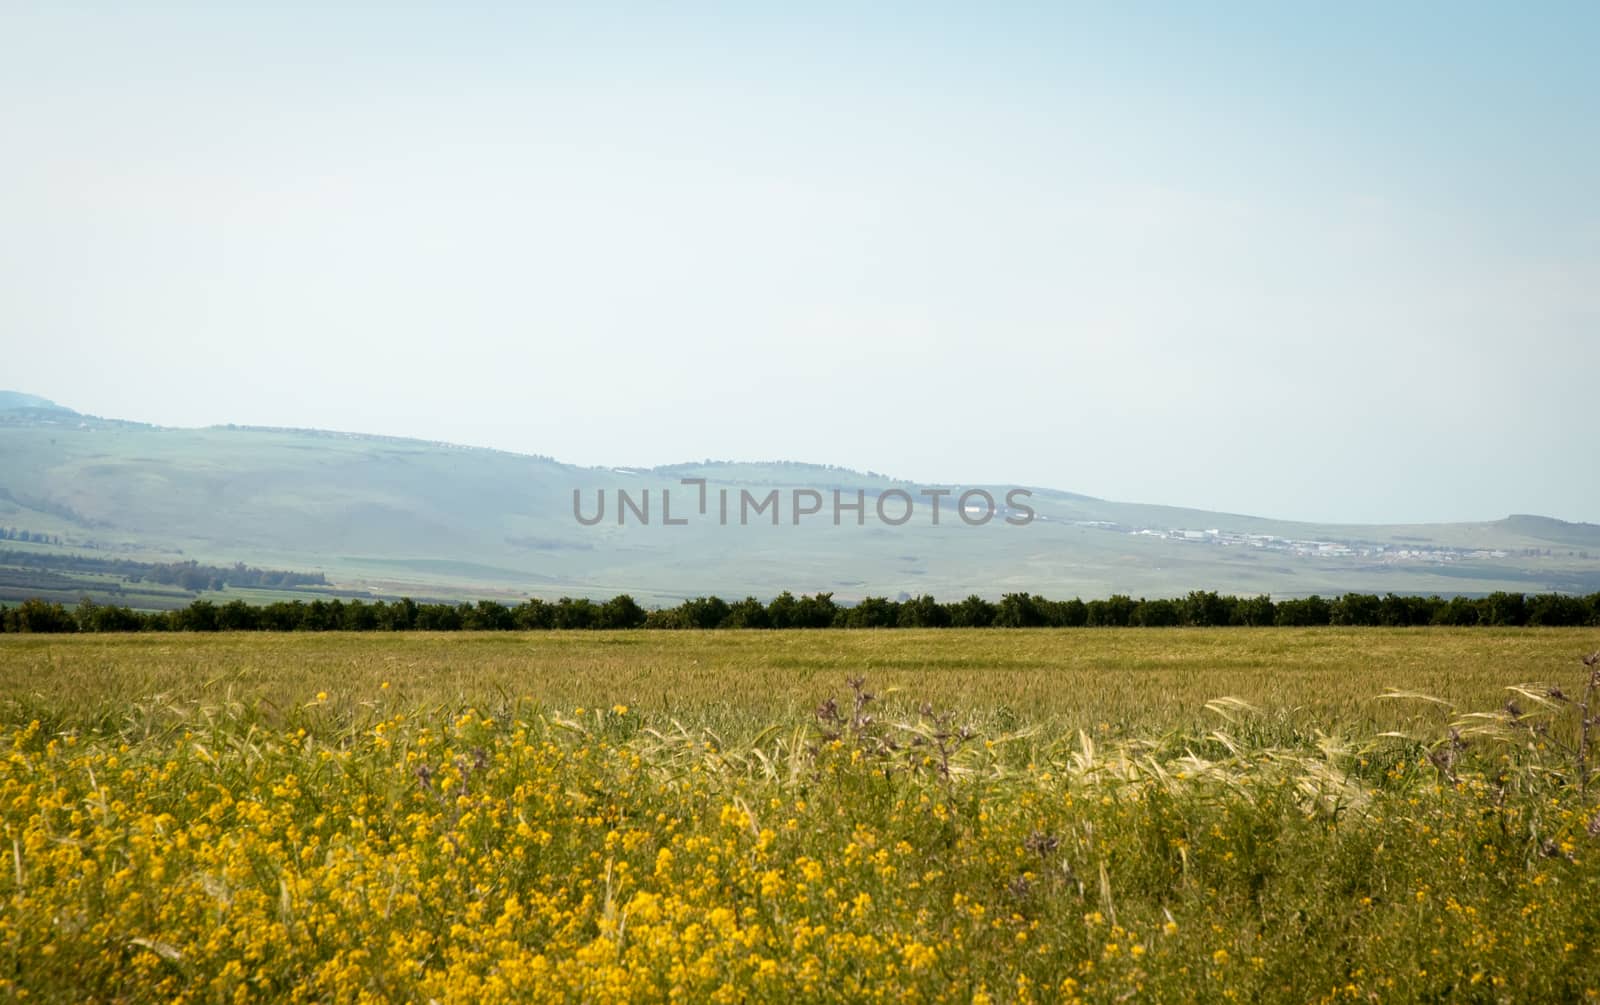 View from Galilee Mountains near Galilee Sea - Kinneret, Israel.